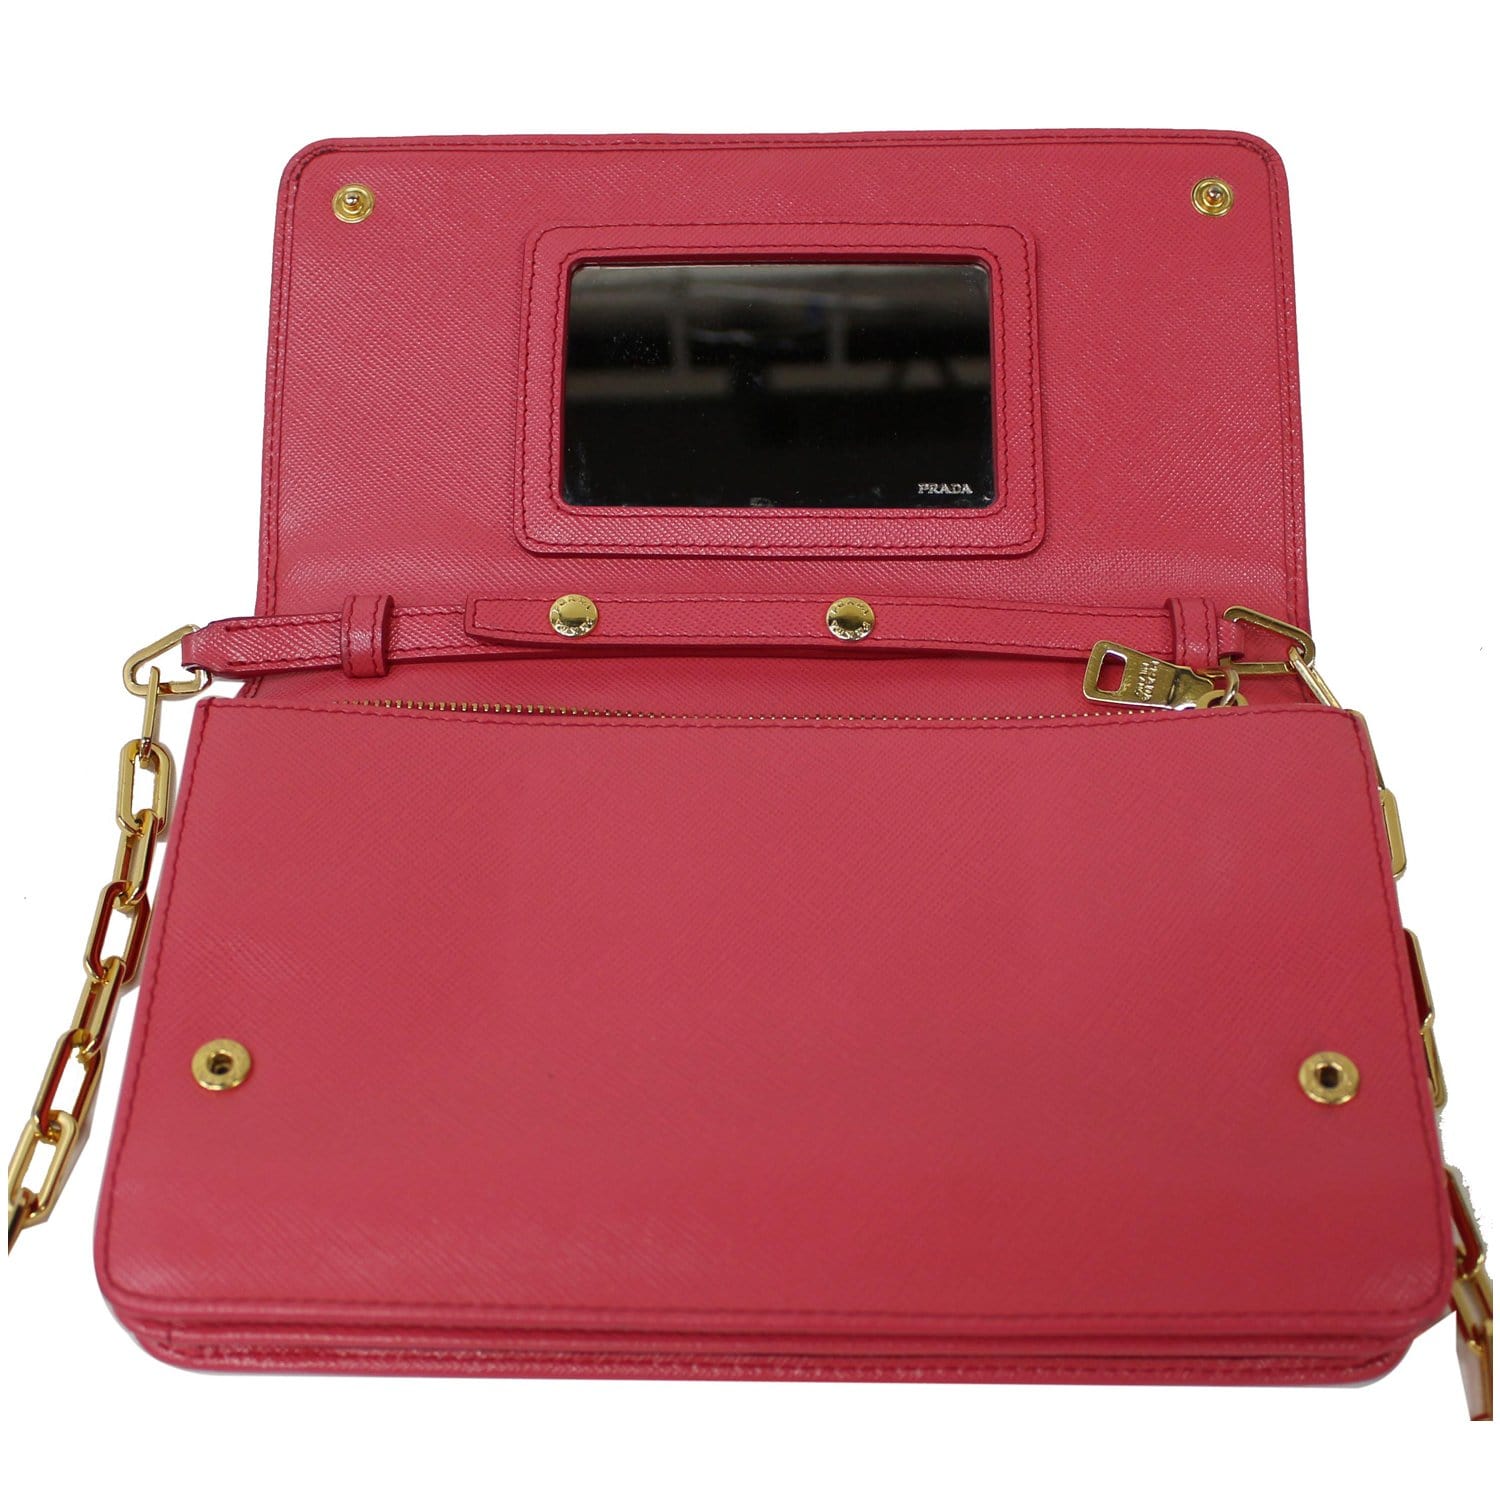 Prada Pink Saffiano Leather Wallet on Chain Prada